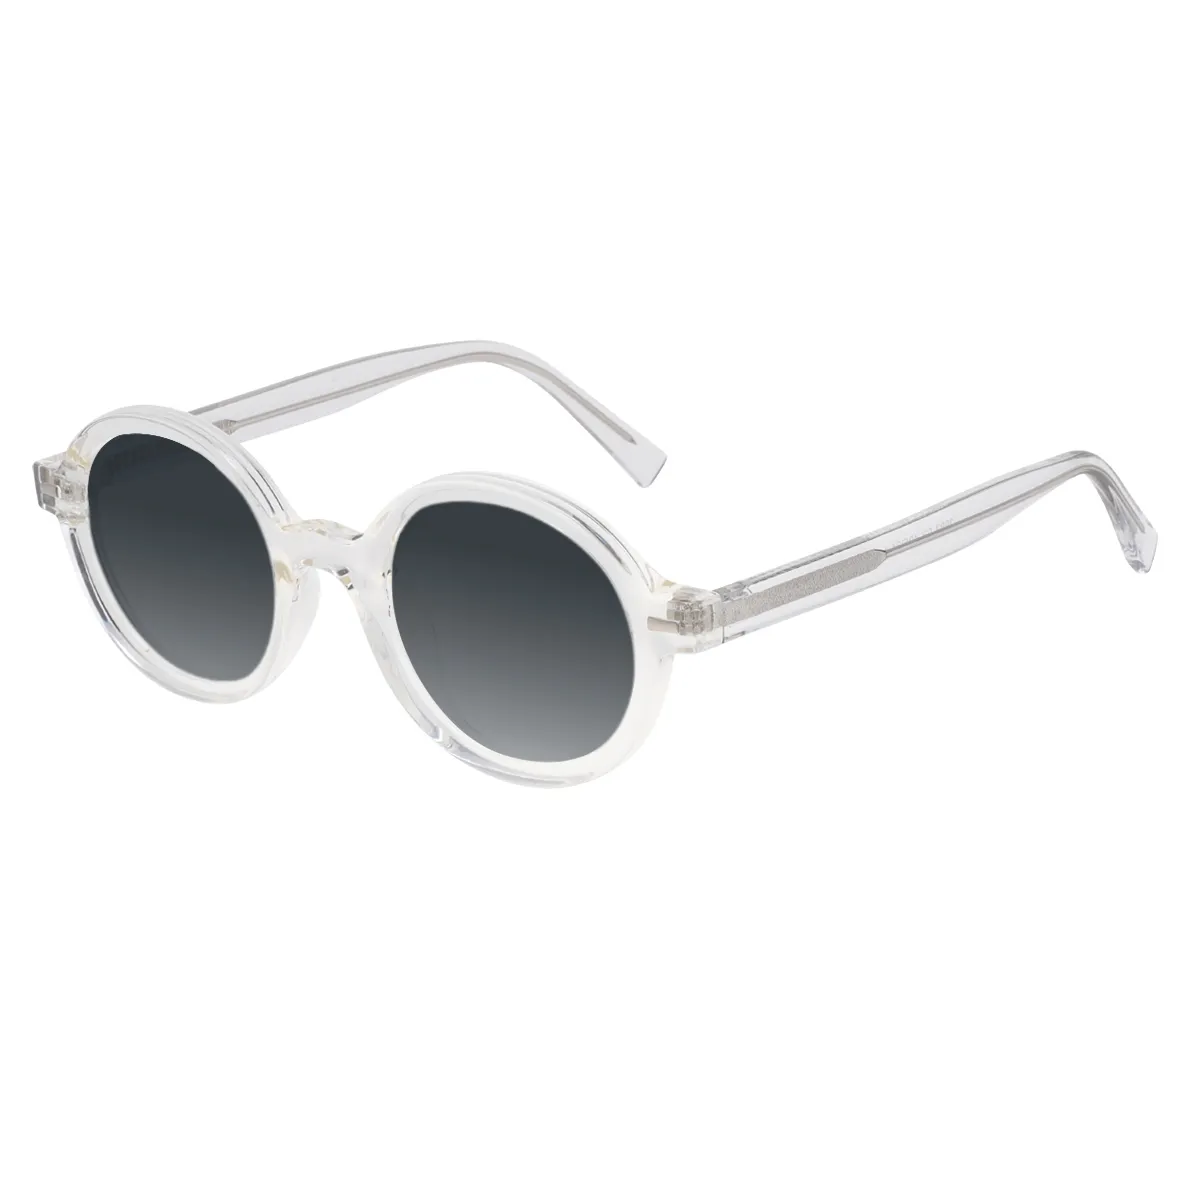 Elsy - Round Translucent Sunglasses for Men & Women